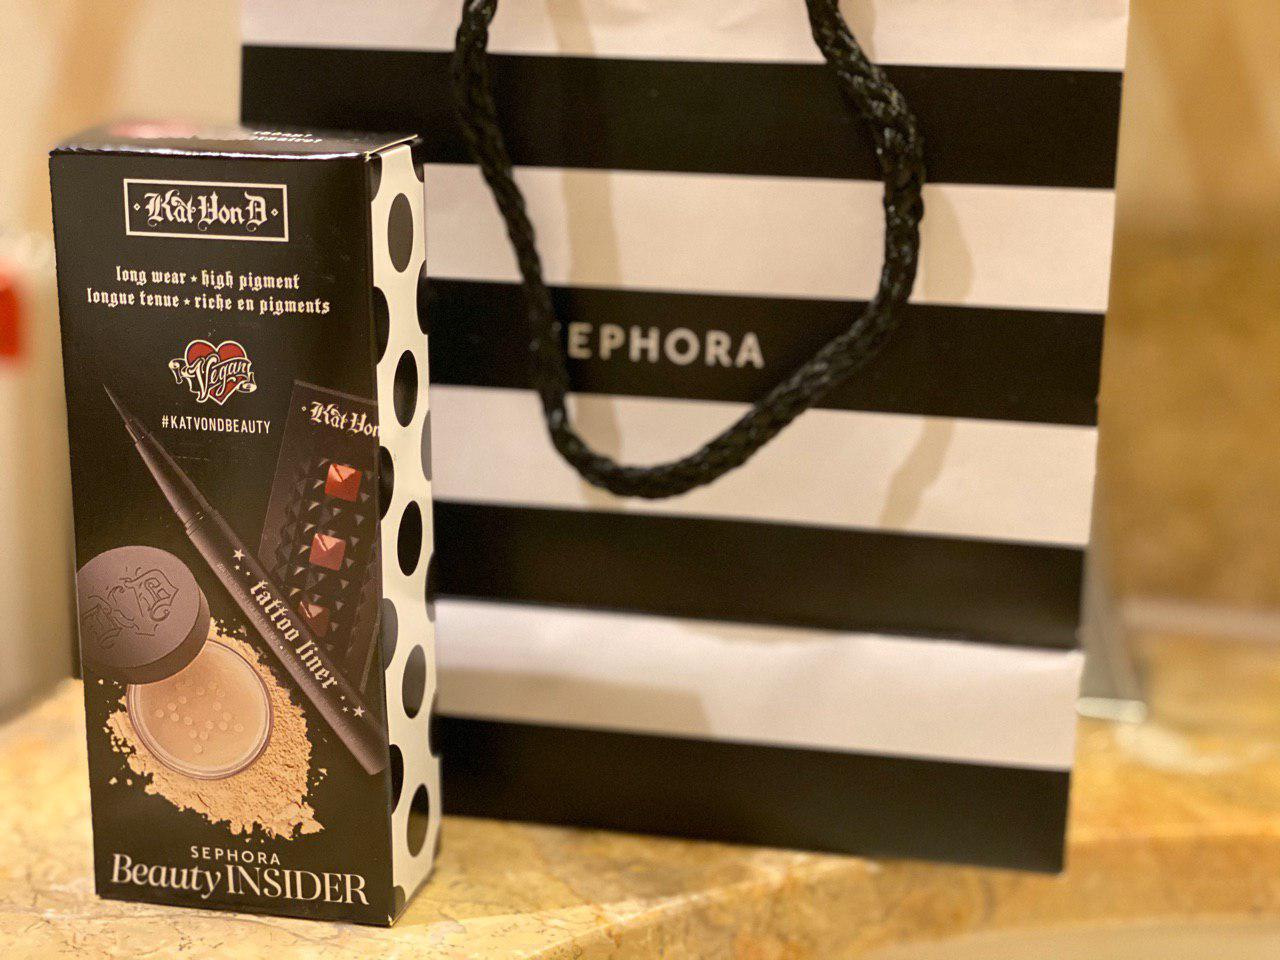 October 2019 Birthday Gift from Sephora